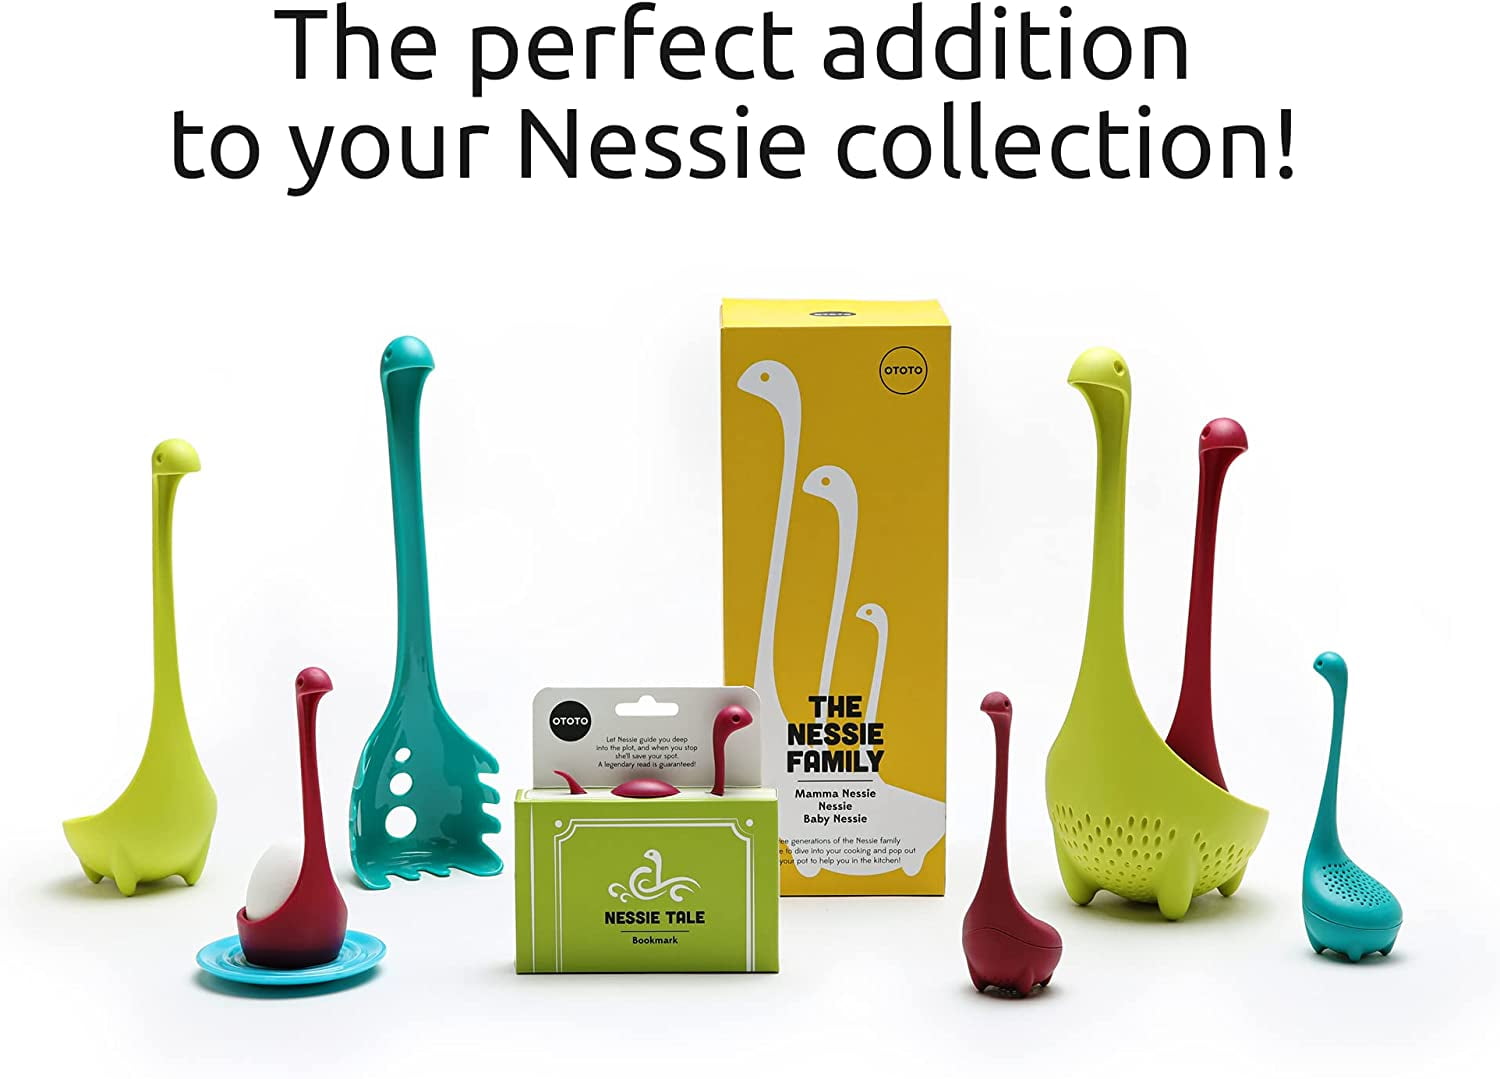 Ototo Nessie Spoon Colander Ladle Soup Kitchen (Turquoise) - Brand New